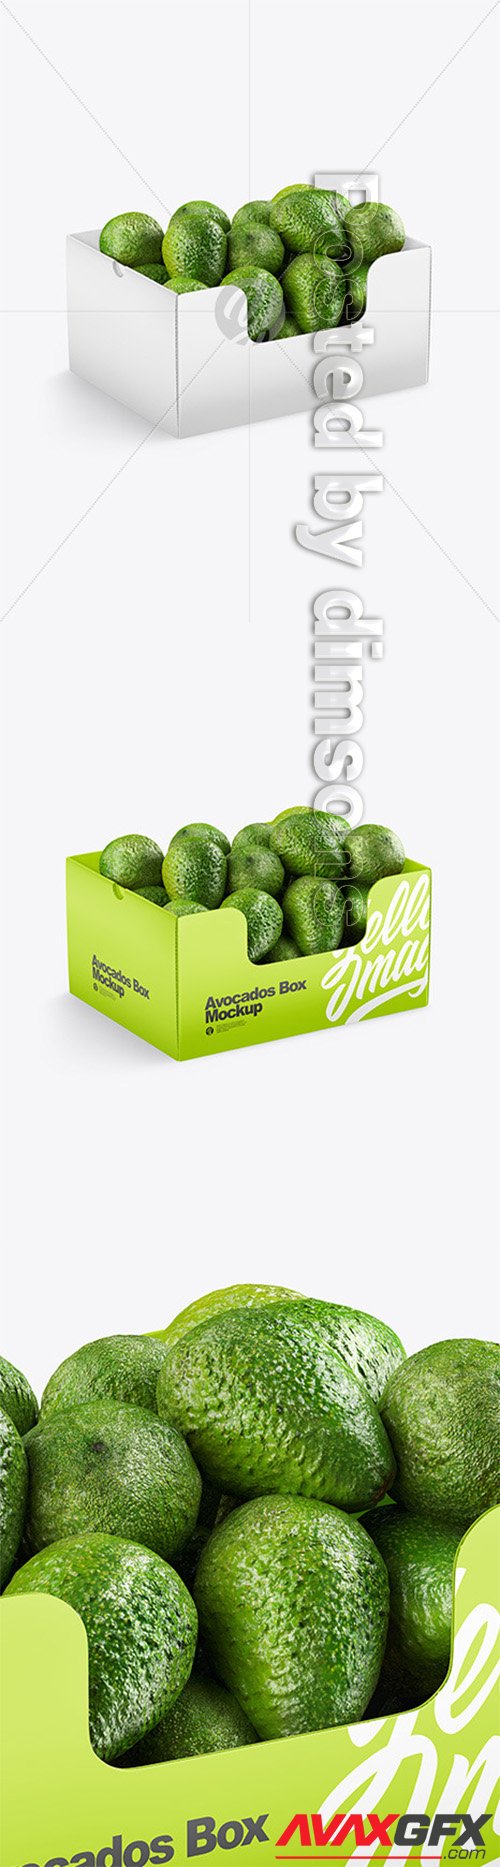 Box With Avocado 52650